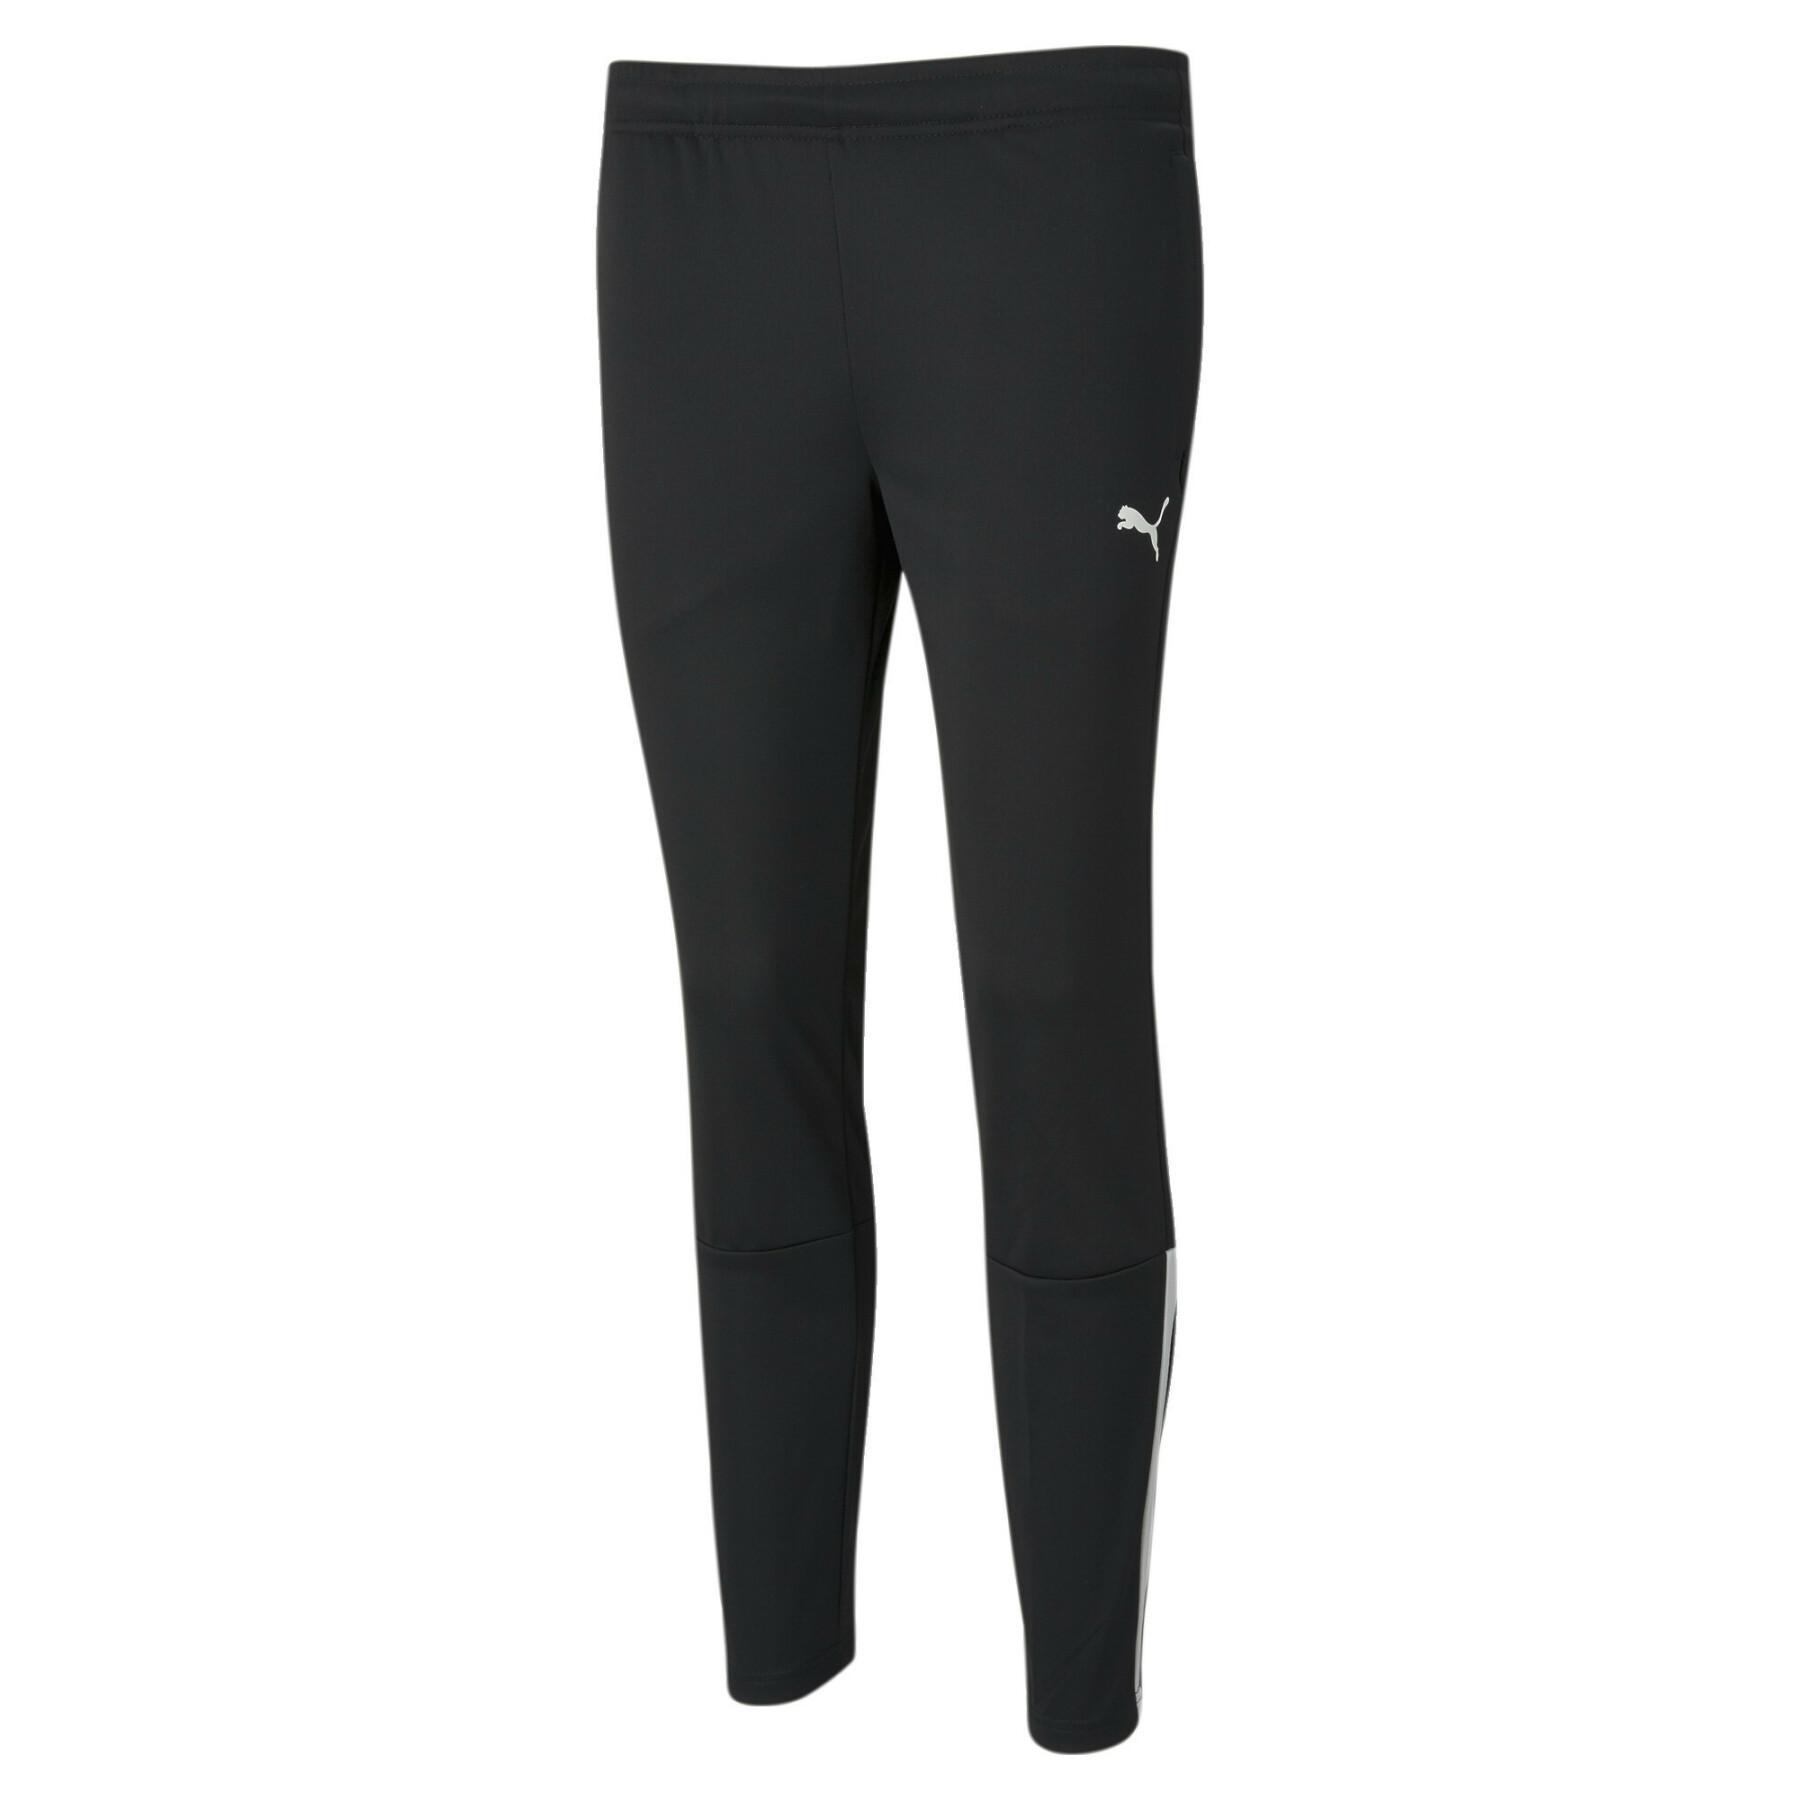 Legging high waist woman Nike One Dri-FIT - Baselayers - Women's wear -  Handball wear